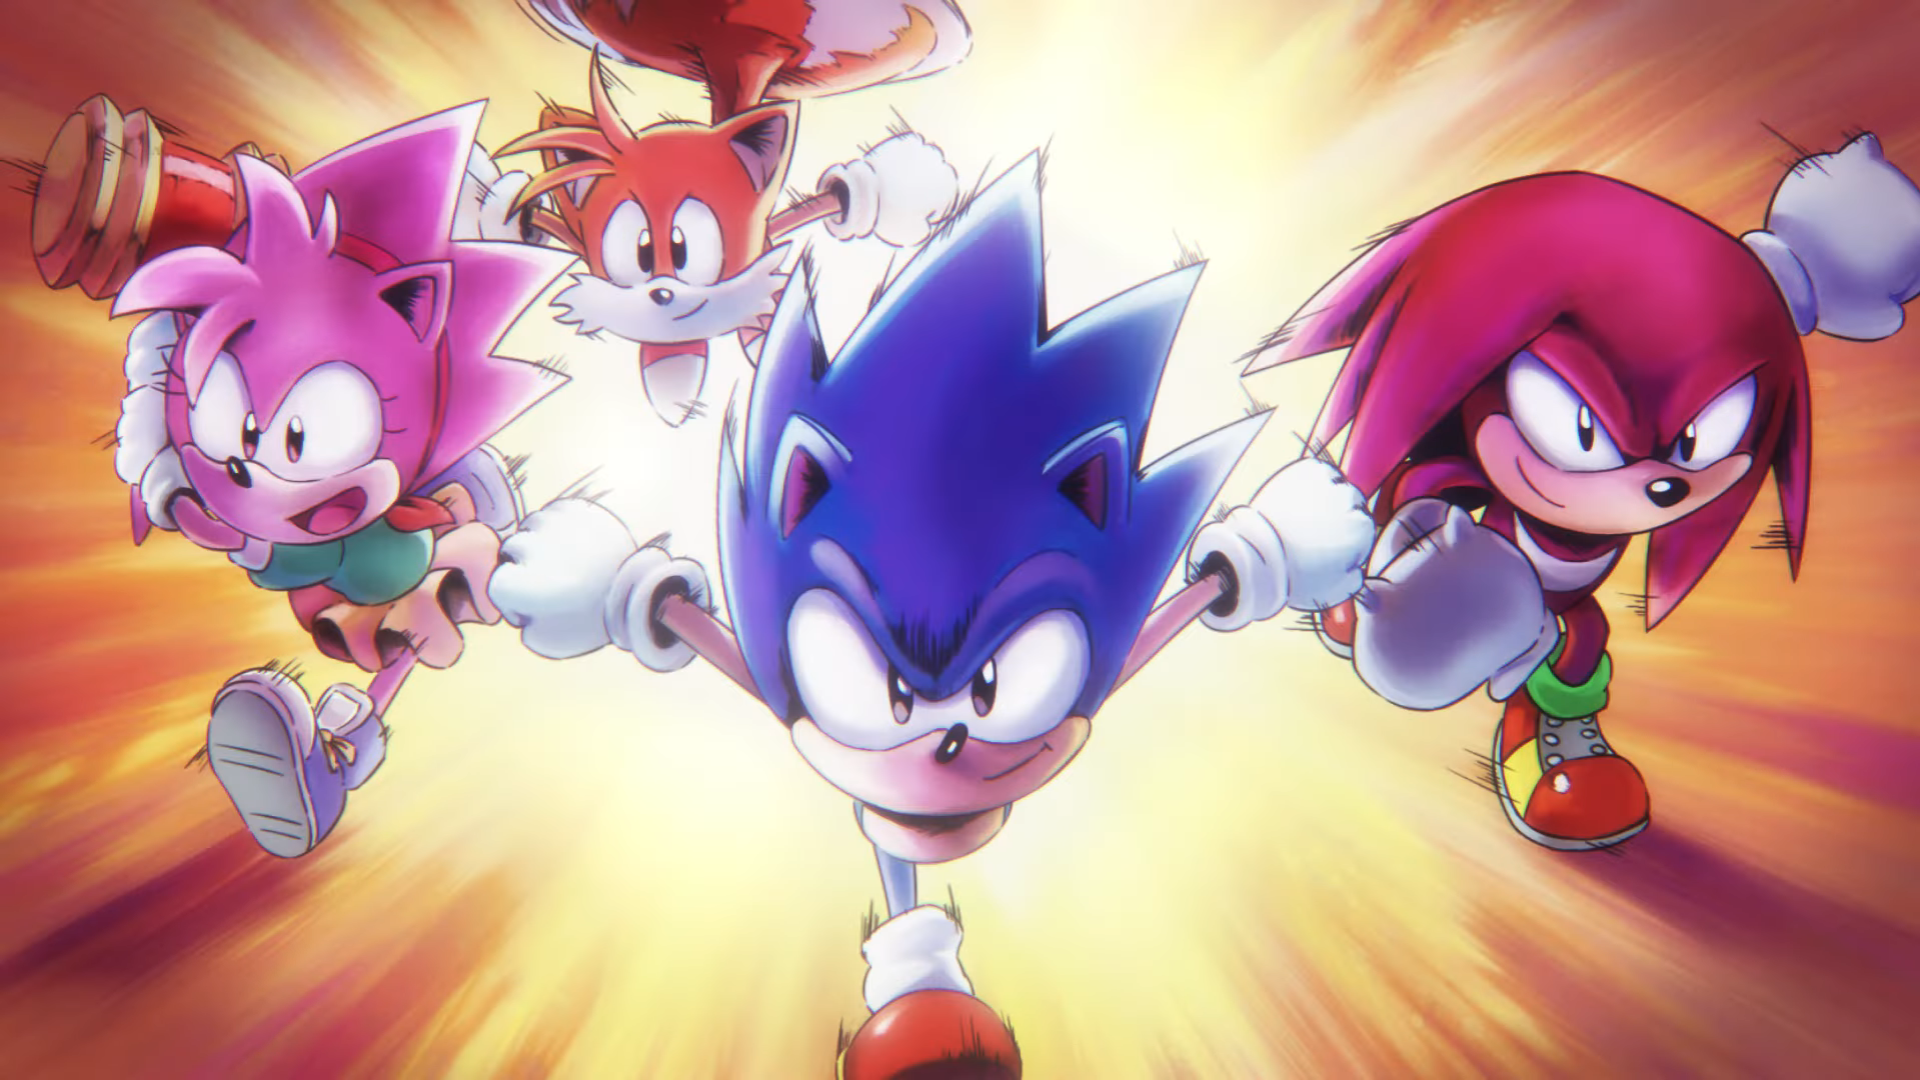 Sonic Superstars Occurs After Sonic Mania and Before Sonic Adventure, Says Takashi Iizuka